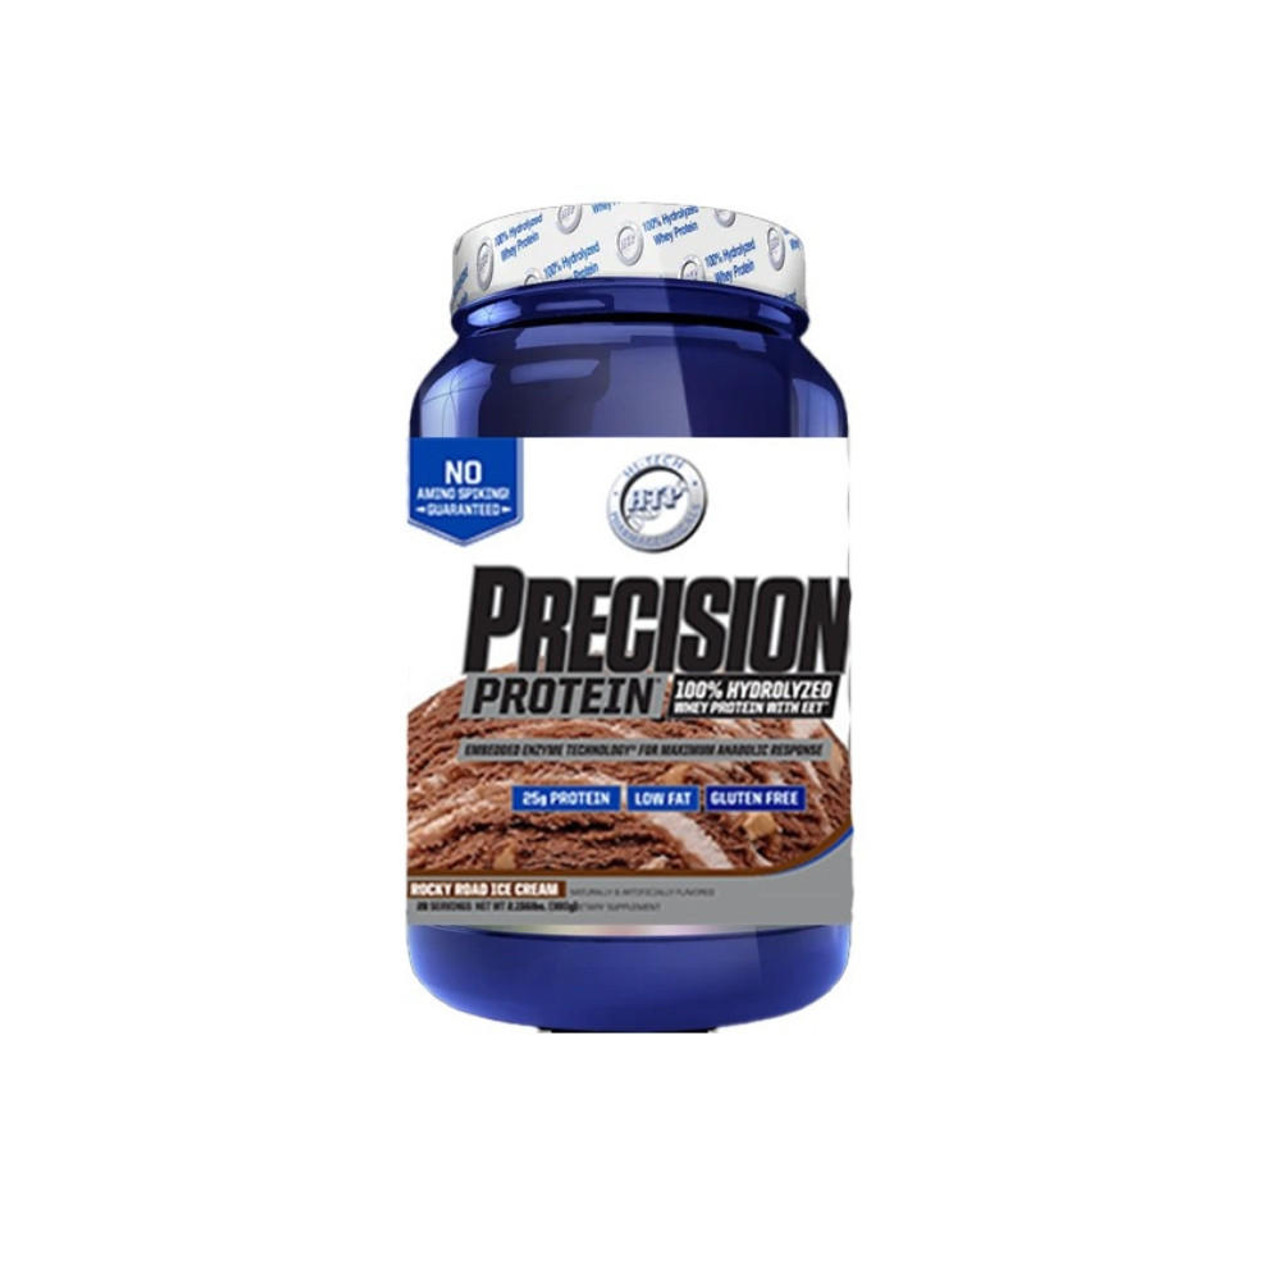 Is it Tree Nut Free Premier Protein 100% Whey Protein Powder